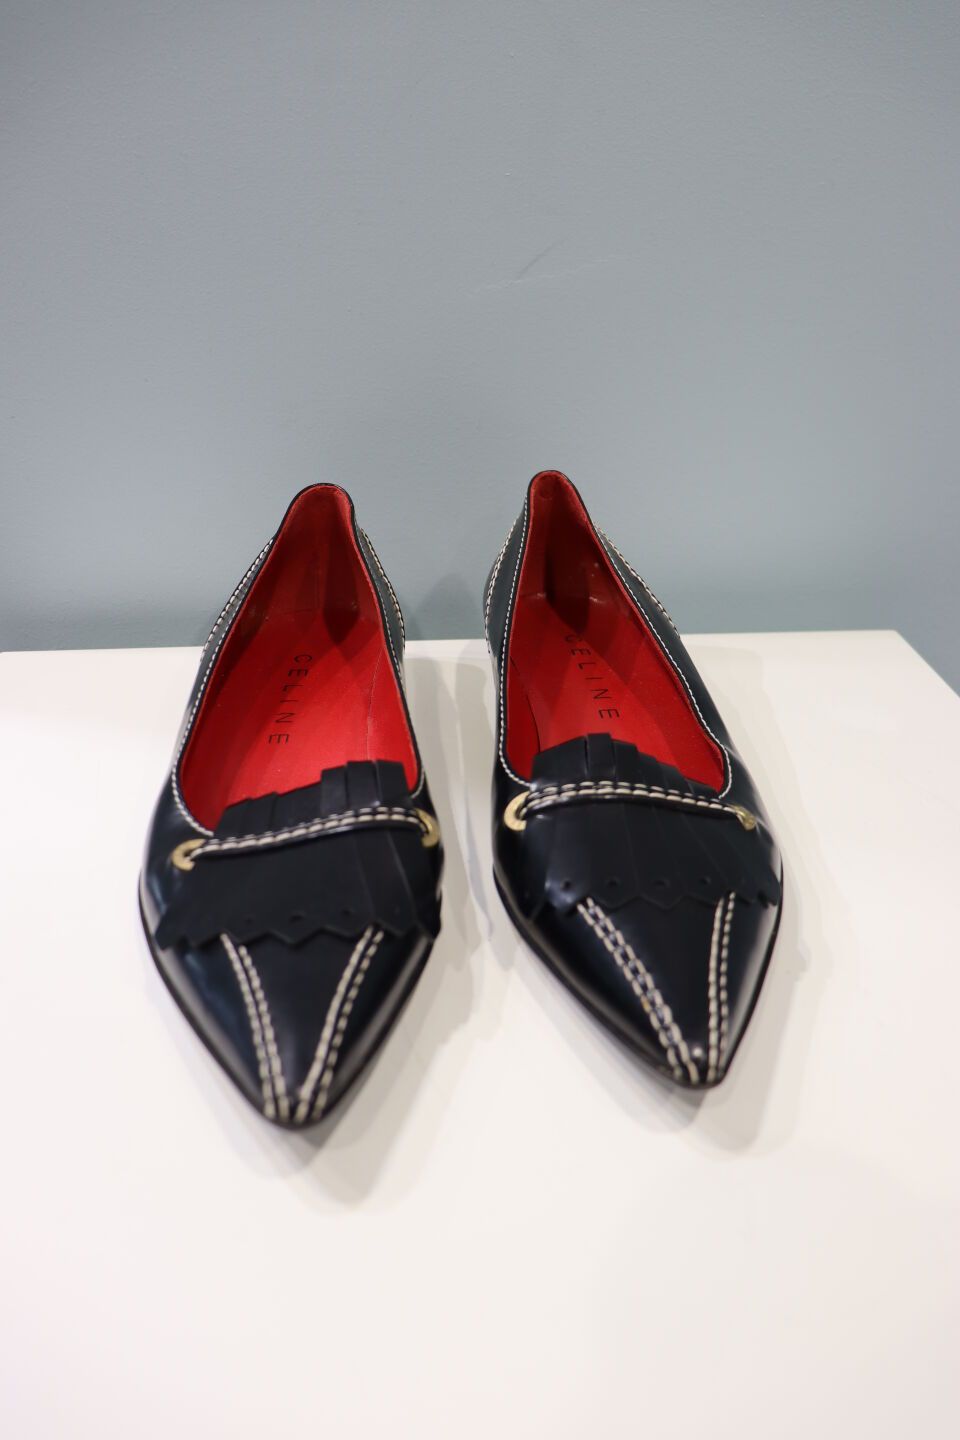 Null CELINE - 一双黑色皮革的女鞋，红色内里，尺寸38。状况良好，有些磨损。